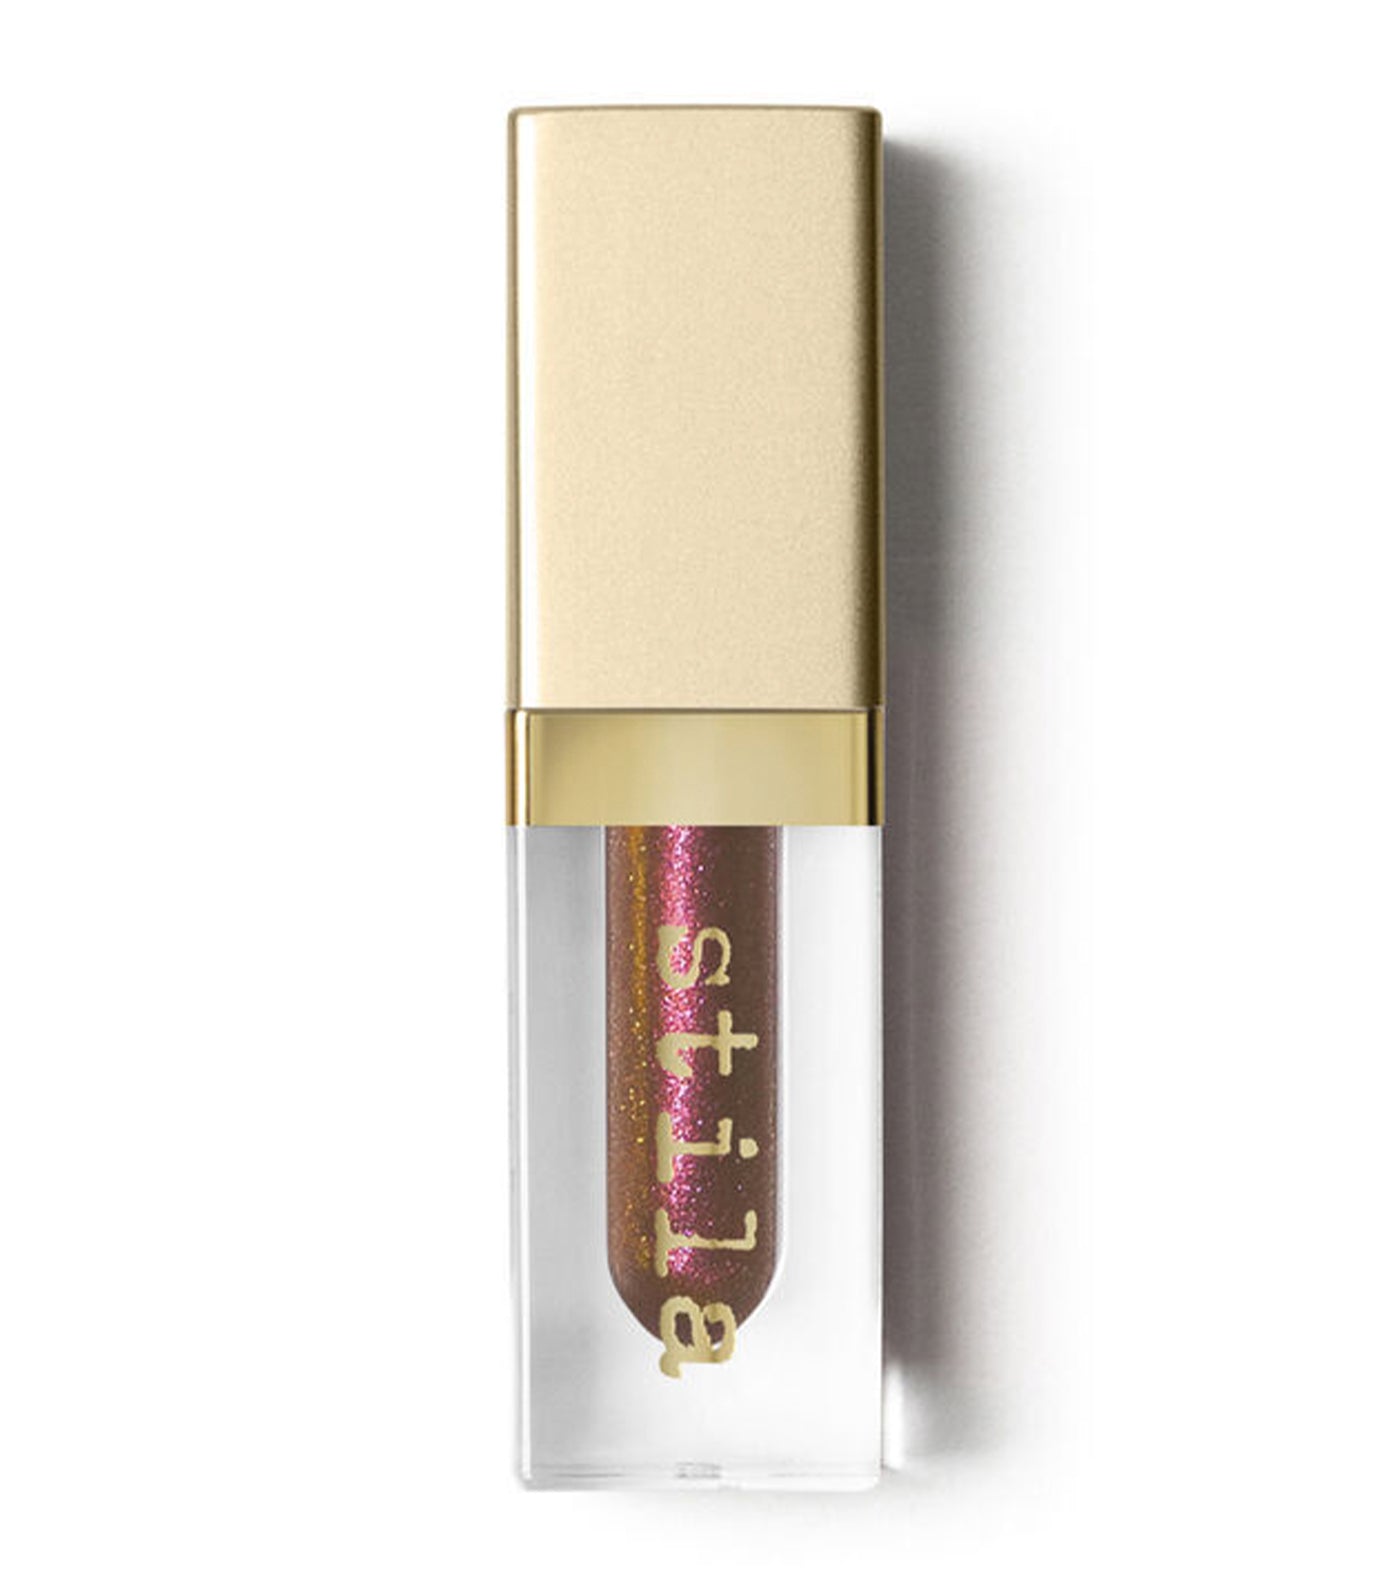 Shiseido Free Deluxe-sized Beauty Boss Lip Gloss Elevator Pitch